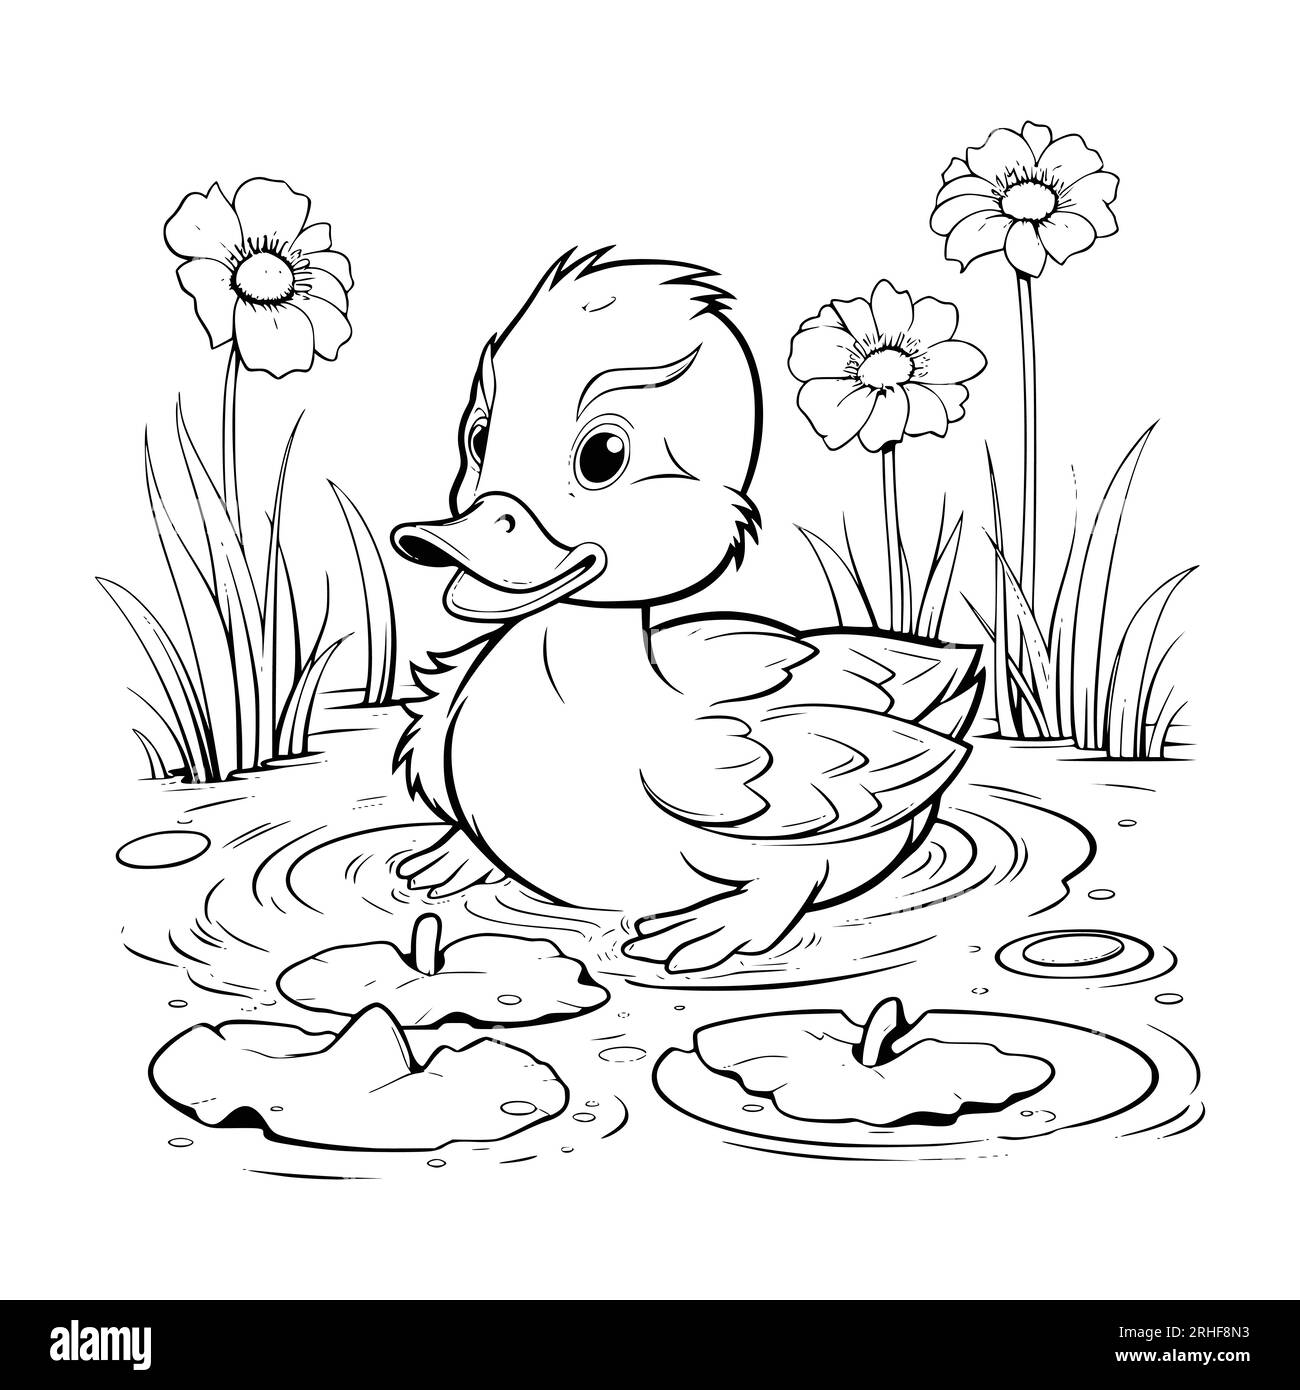 100+] Donald Duck Backgrounds | Wallpapers.com